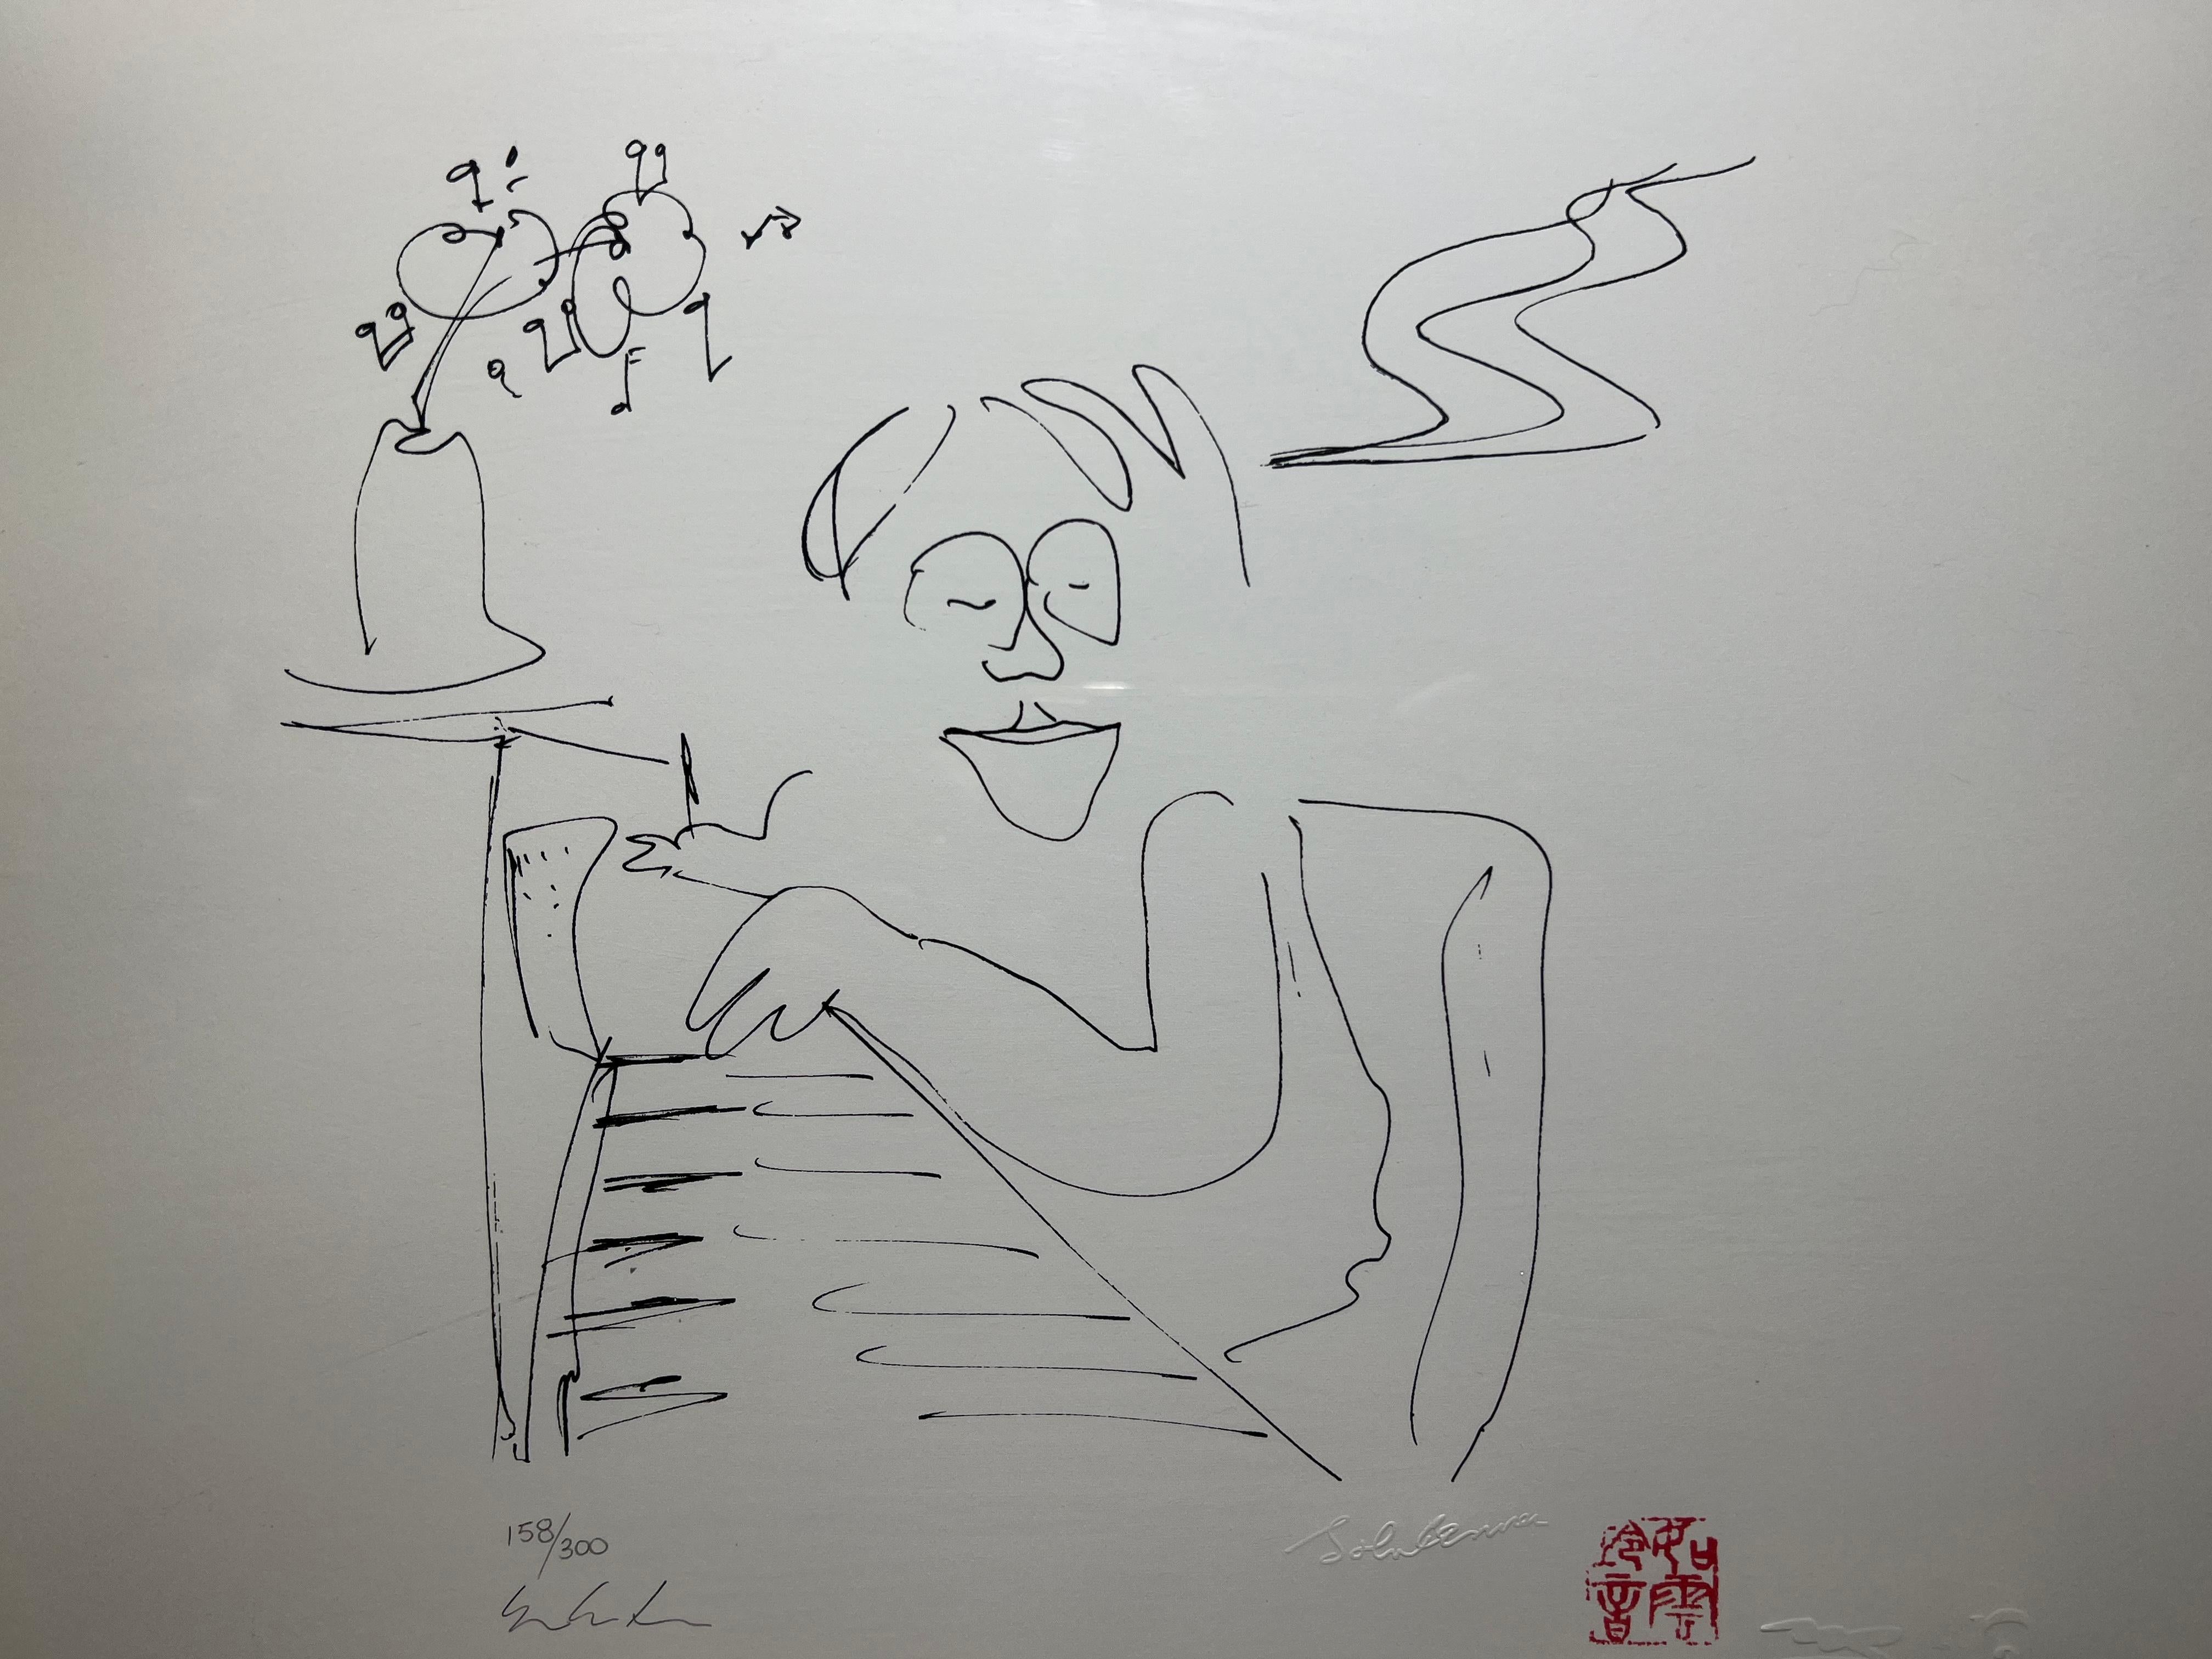 BABY GRAND sign  la main par Yoko Ono, dition 158/300  - Gris Abstract Print par John Lennon